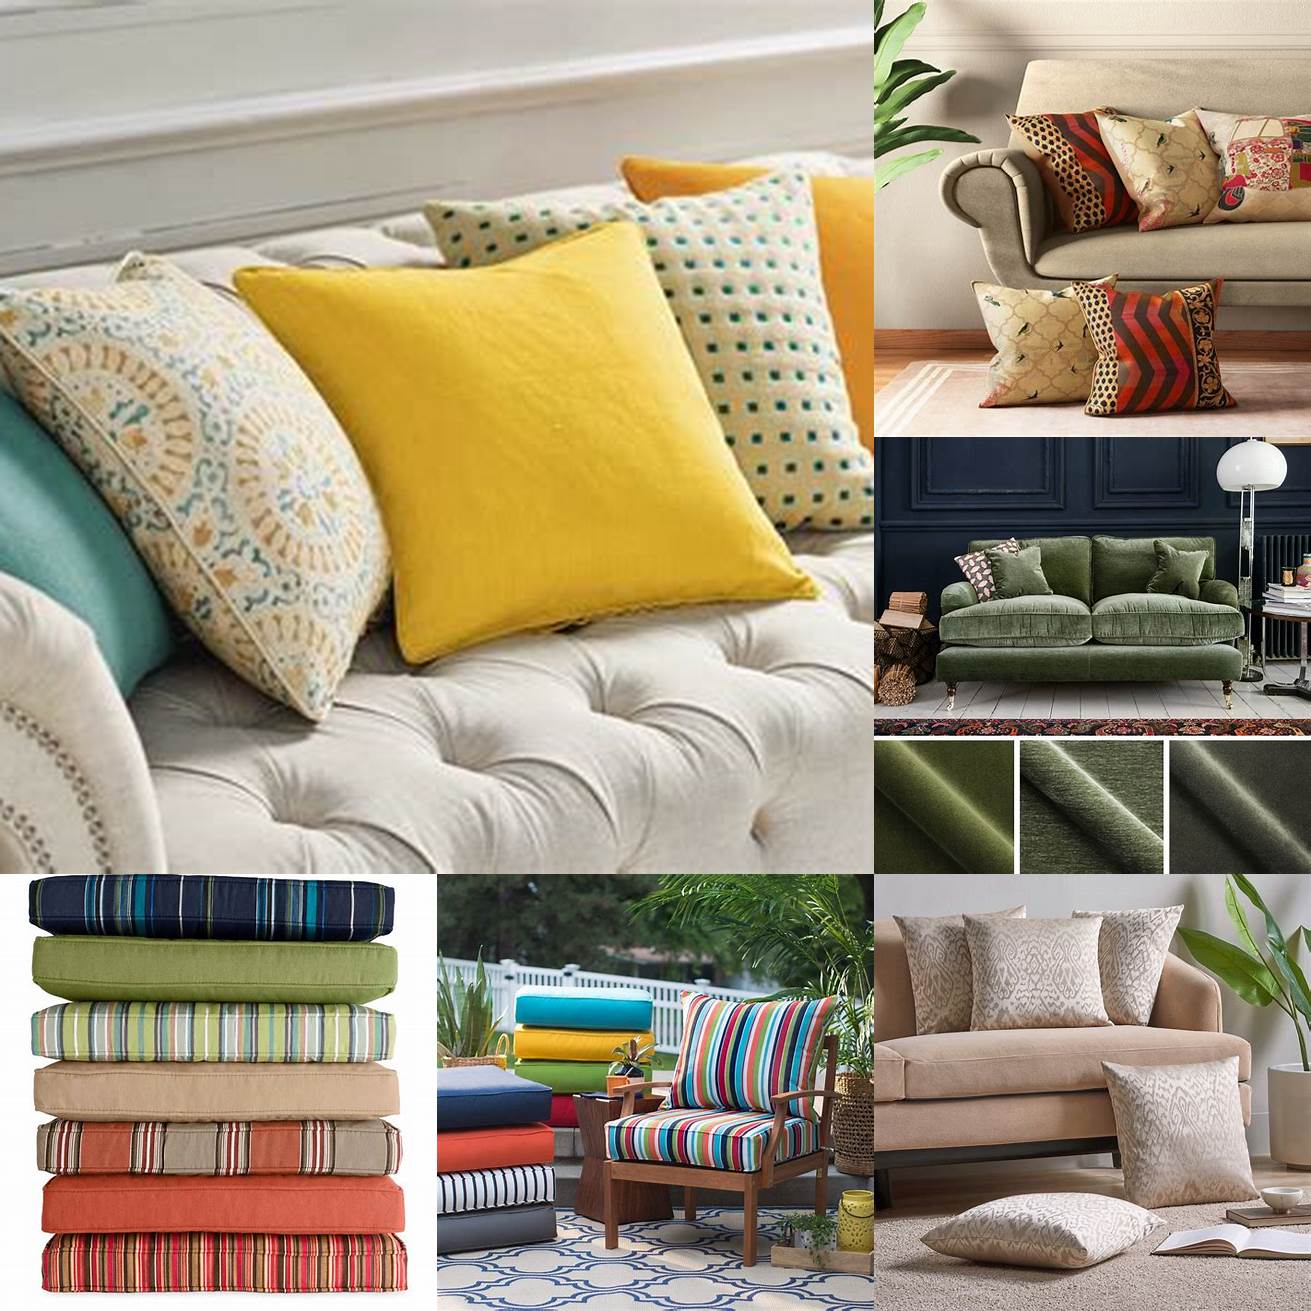 Choose Durable Cushions and Fabrics